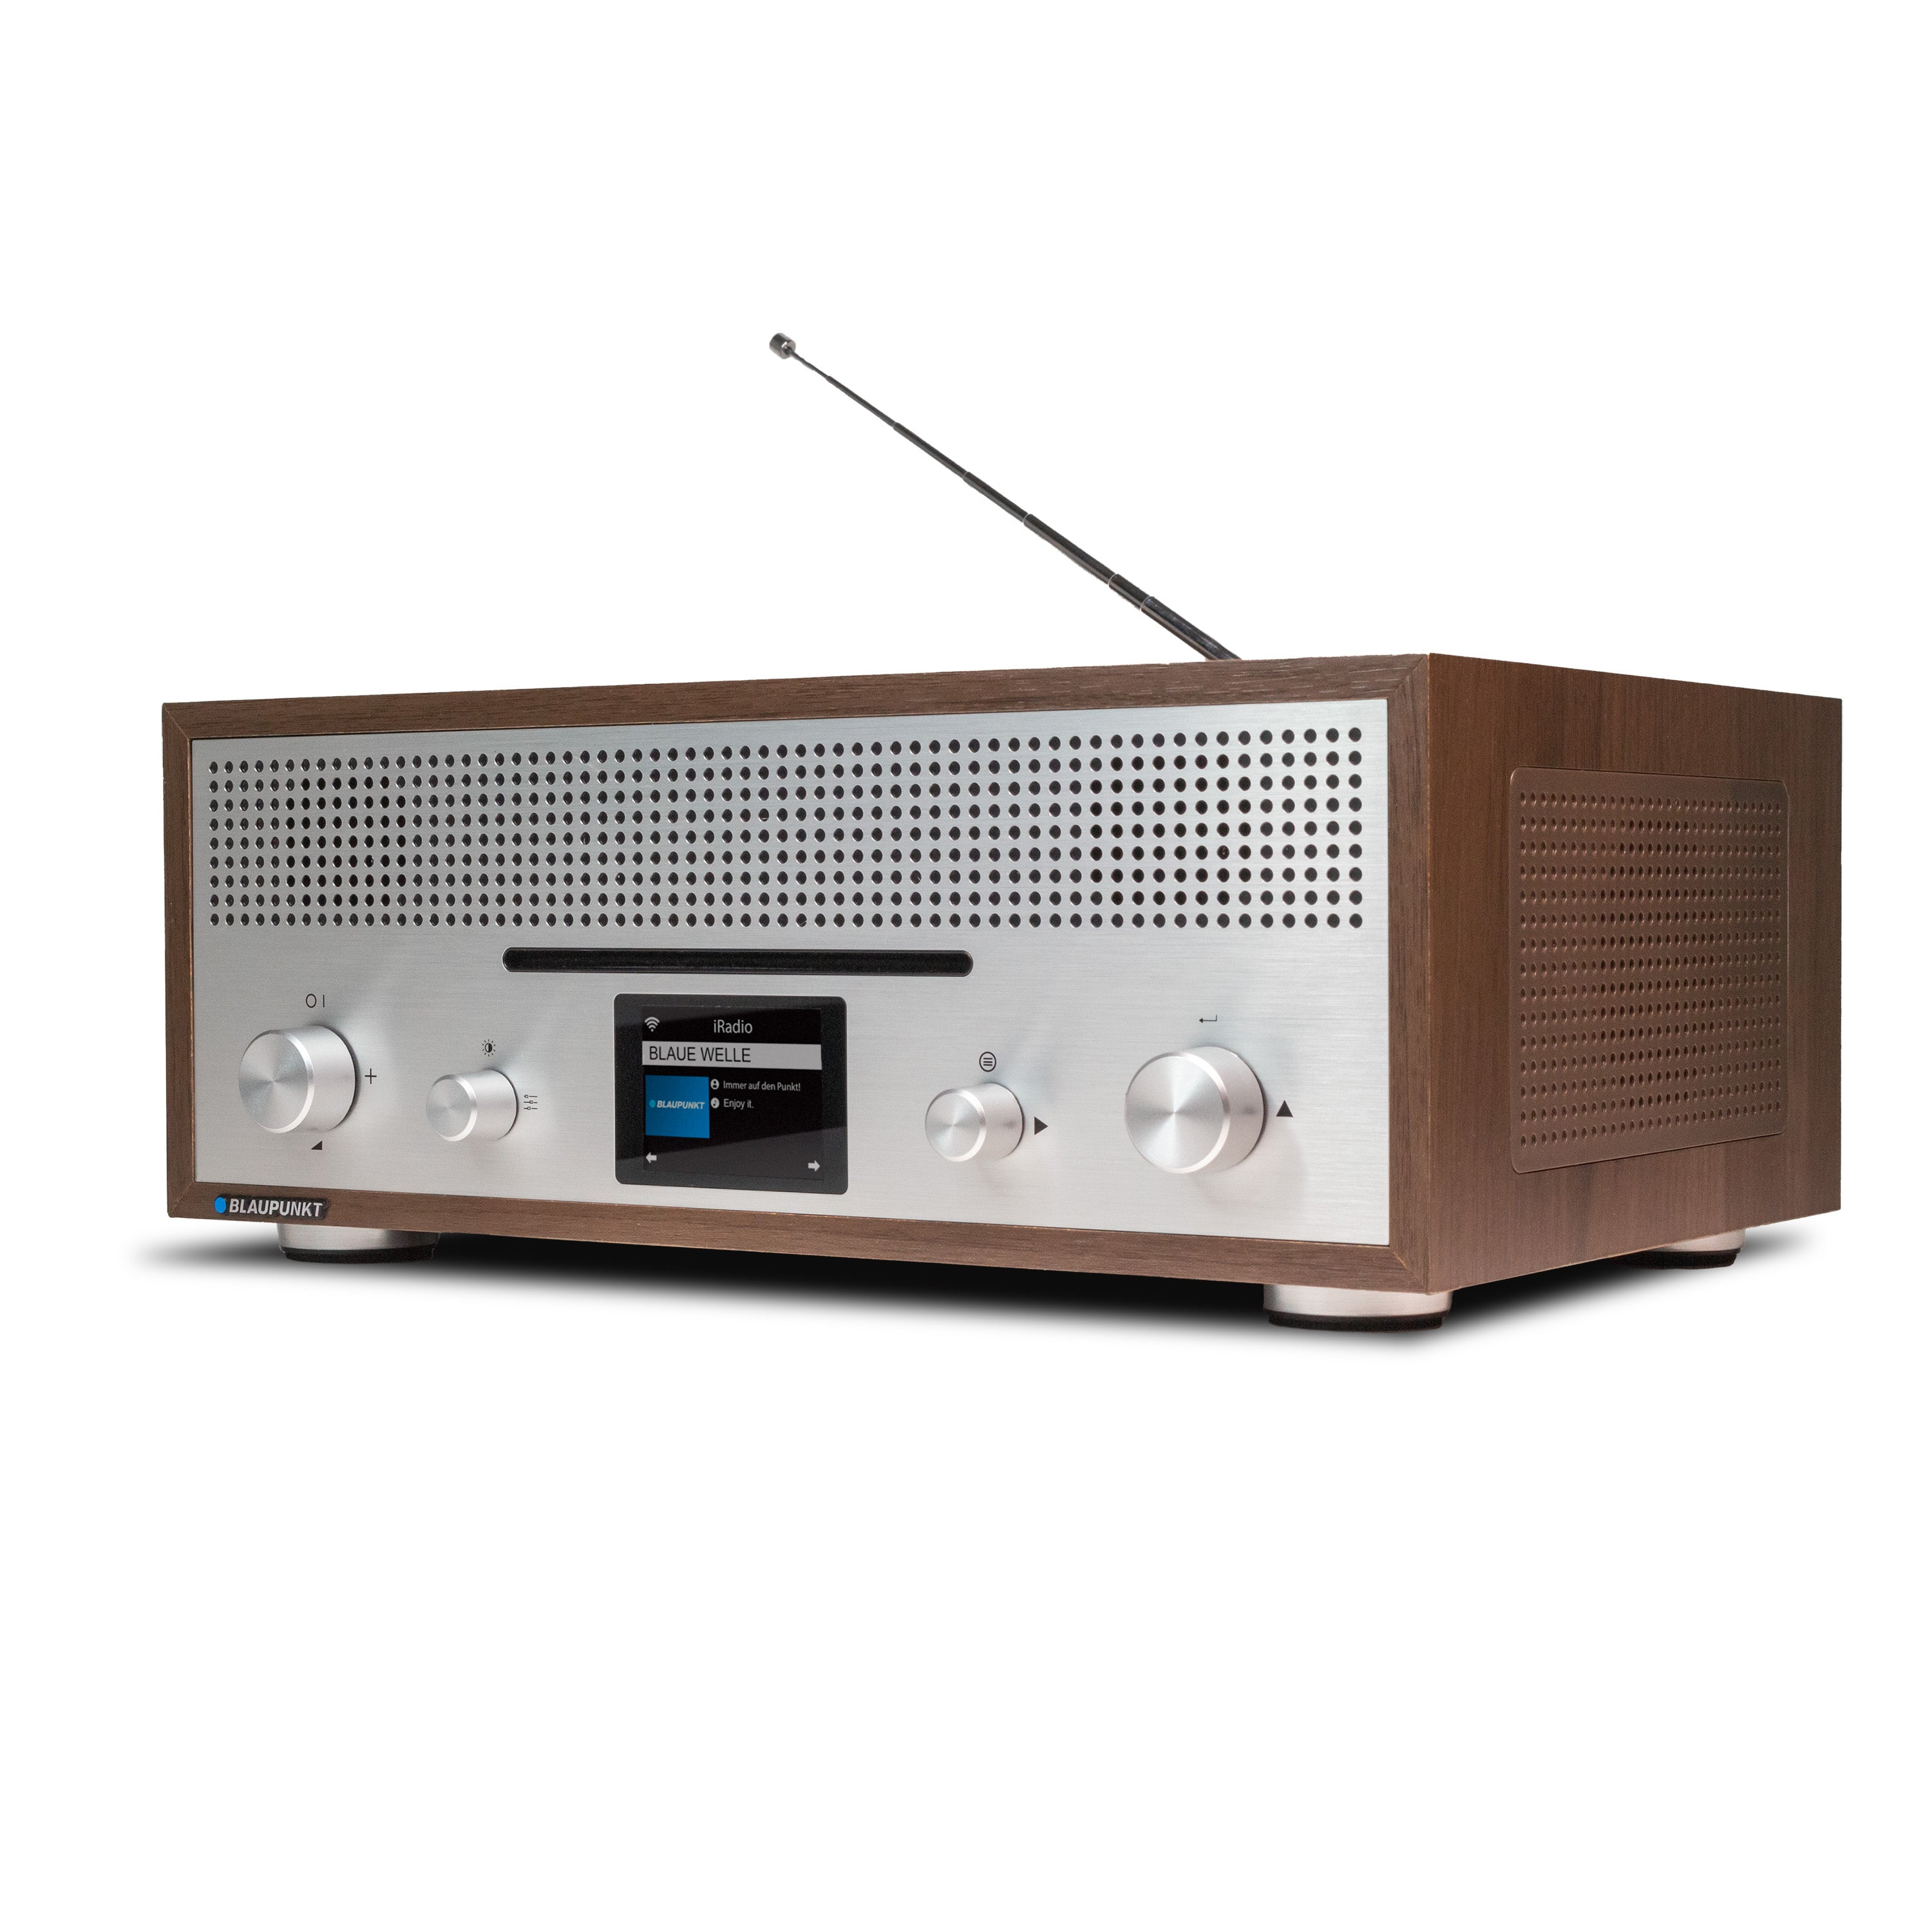 Internet BLAUPUNKT FM, Nostalgie Bluetooth, | Walnuss DAB+, RXD MILANO 1900 Radio, Radio,